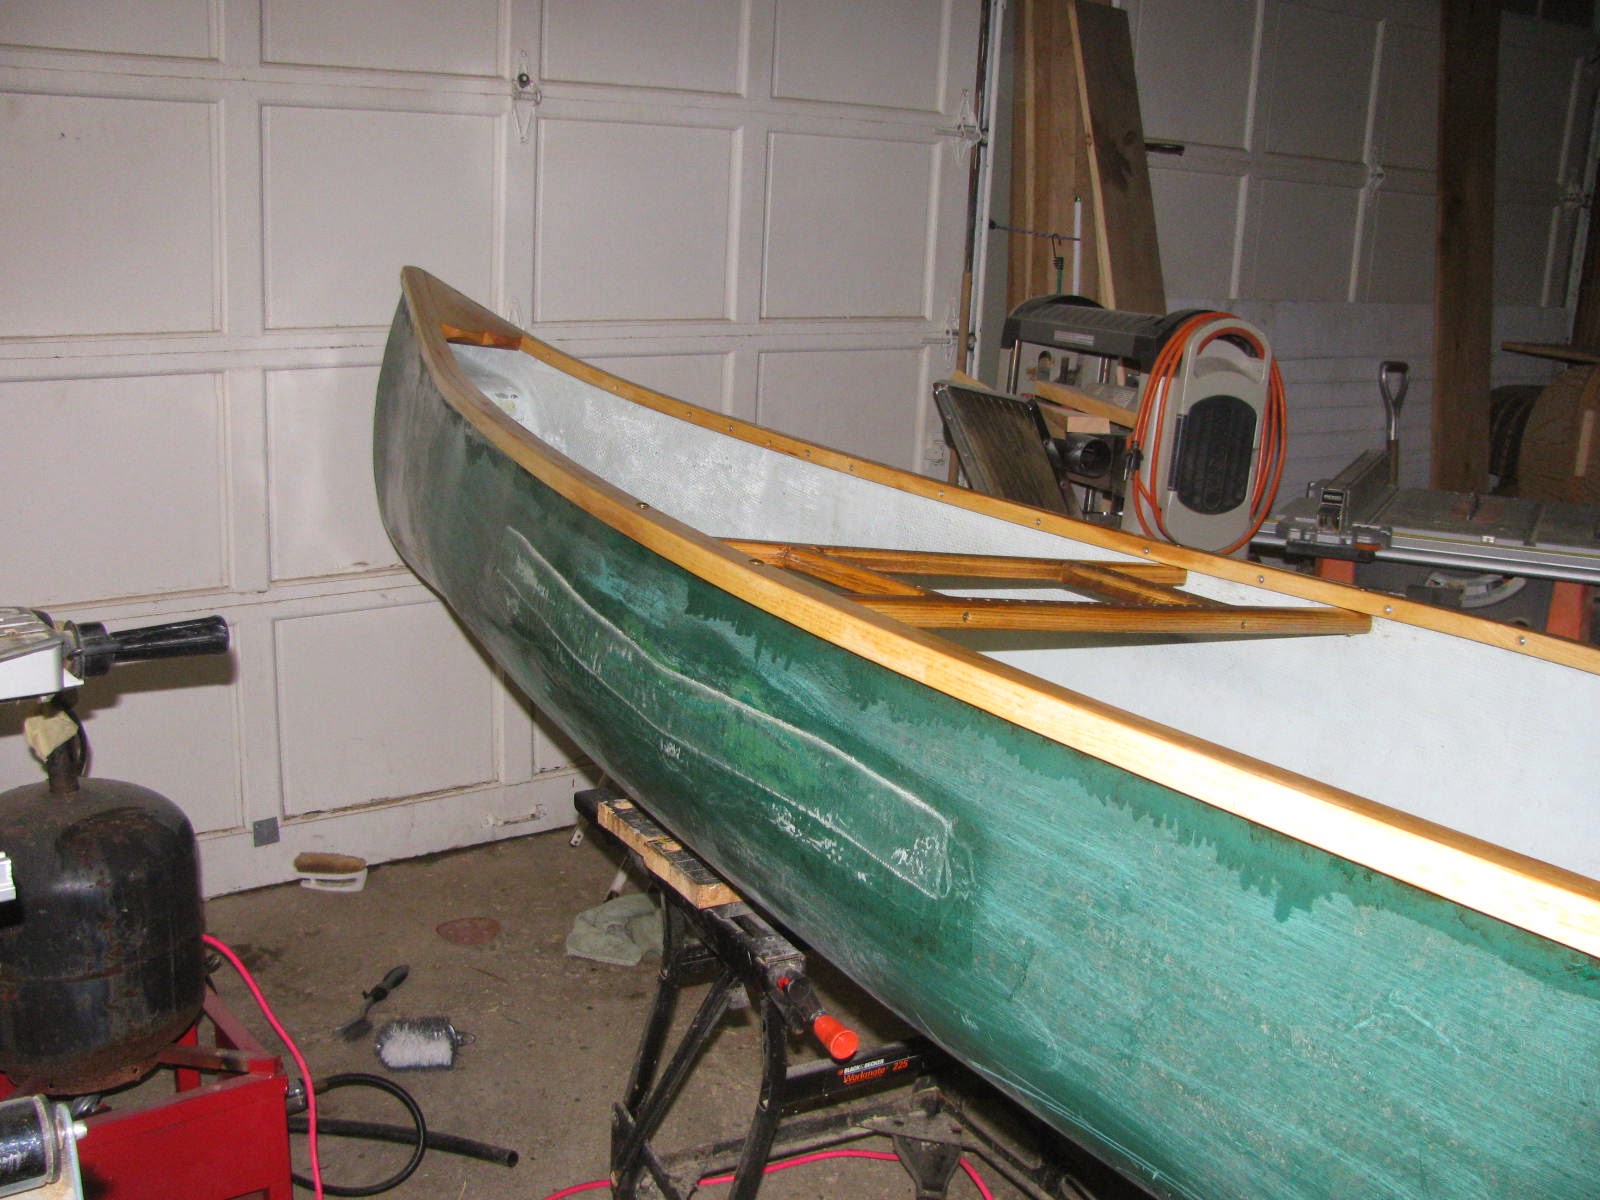 Ravenwood Blog: Another rotted fiberglass canoe